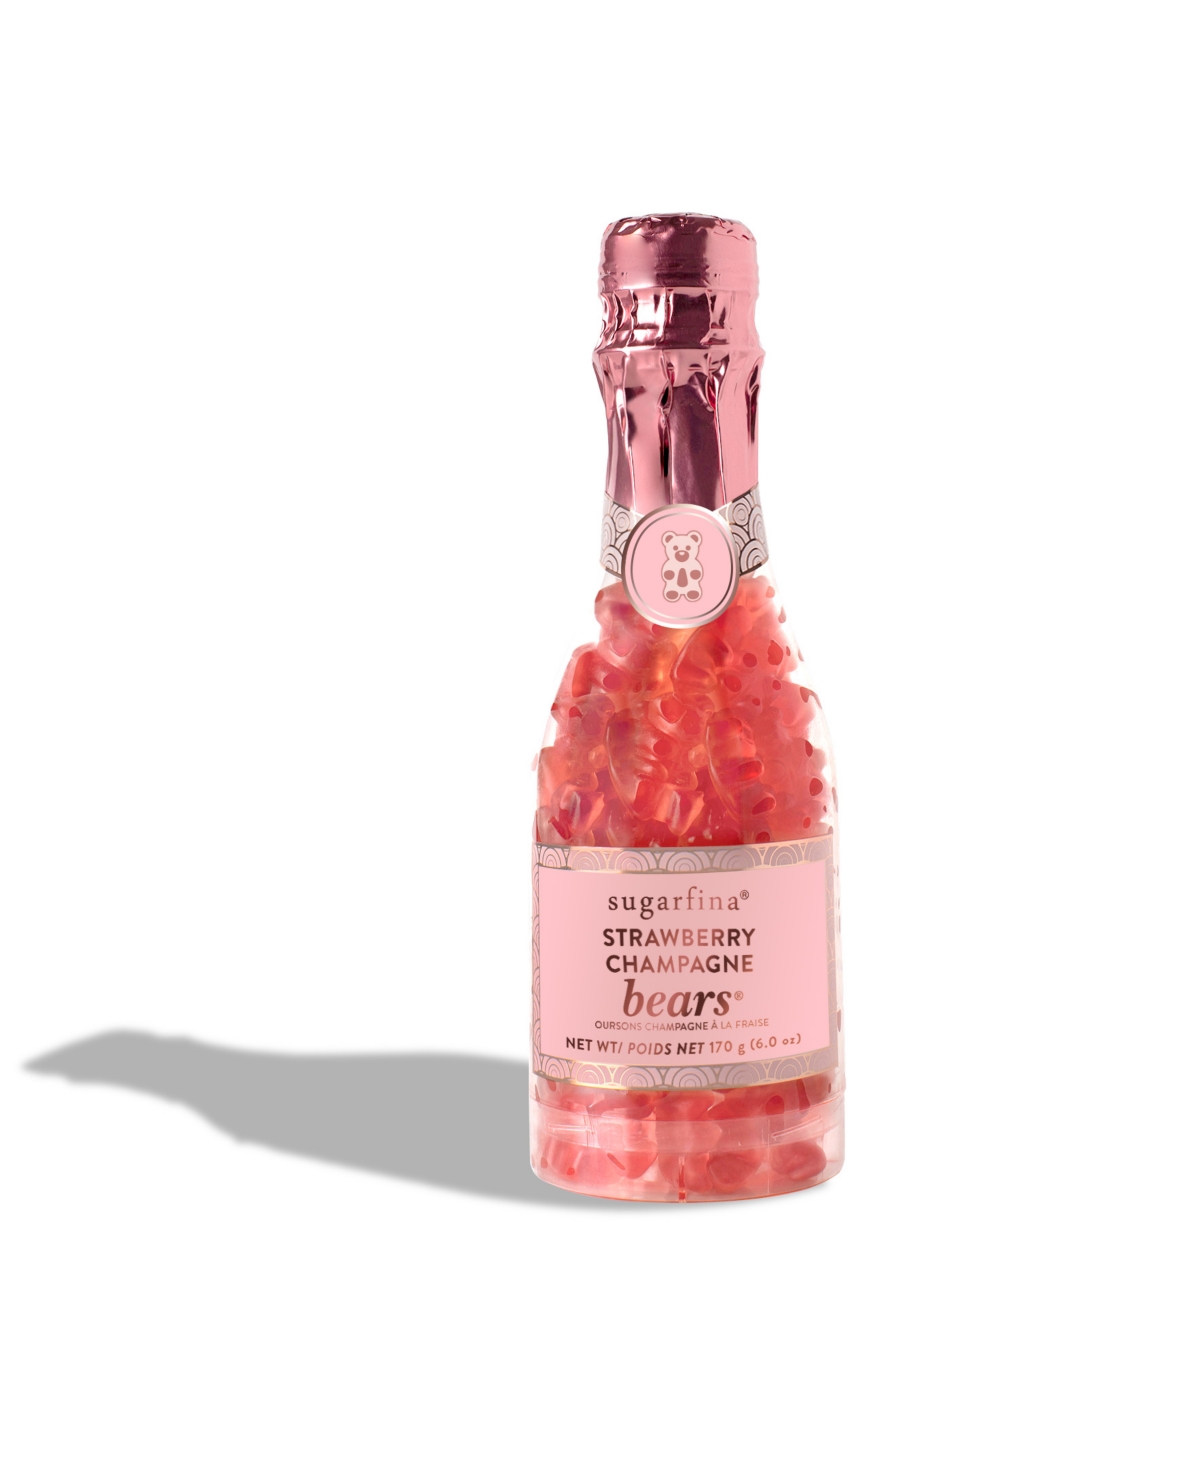 Sugarfina Strawberry Champagne Bears - Bottle Pop The Champagne 3